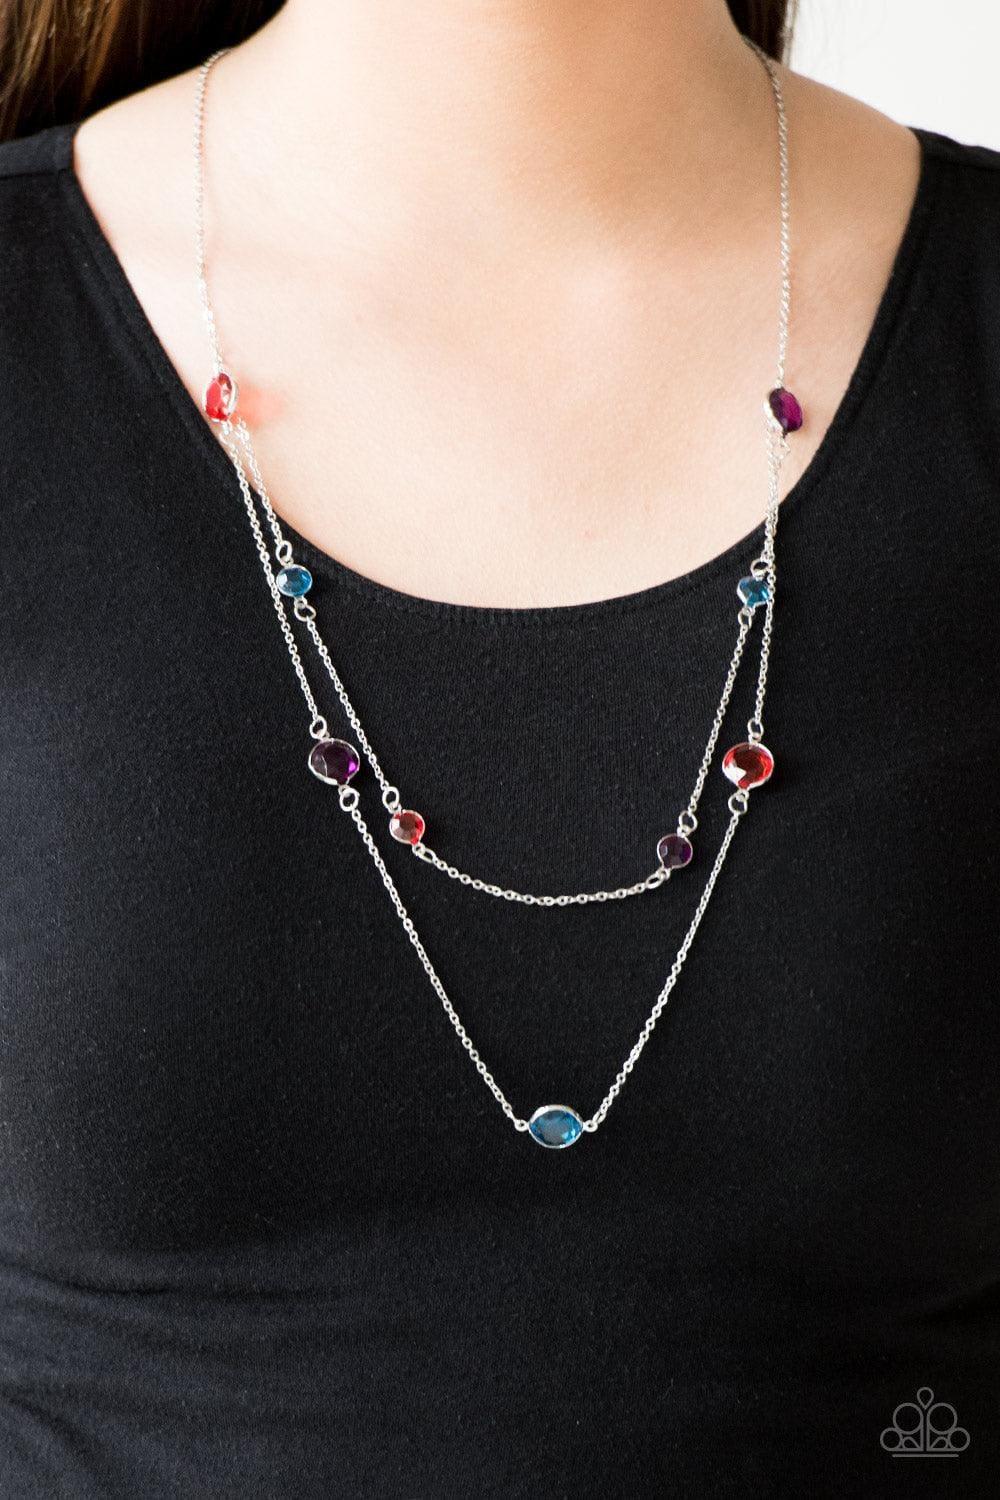 Paparazzi Accessories - Raise Your Glass - Multicolor Necklace - Bling by JessieK